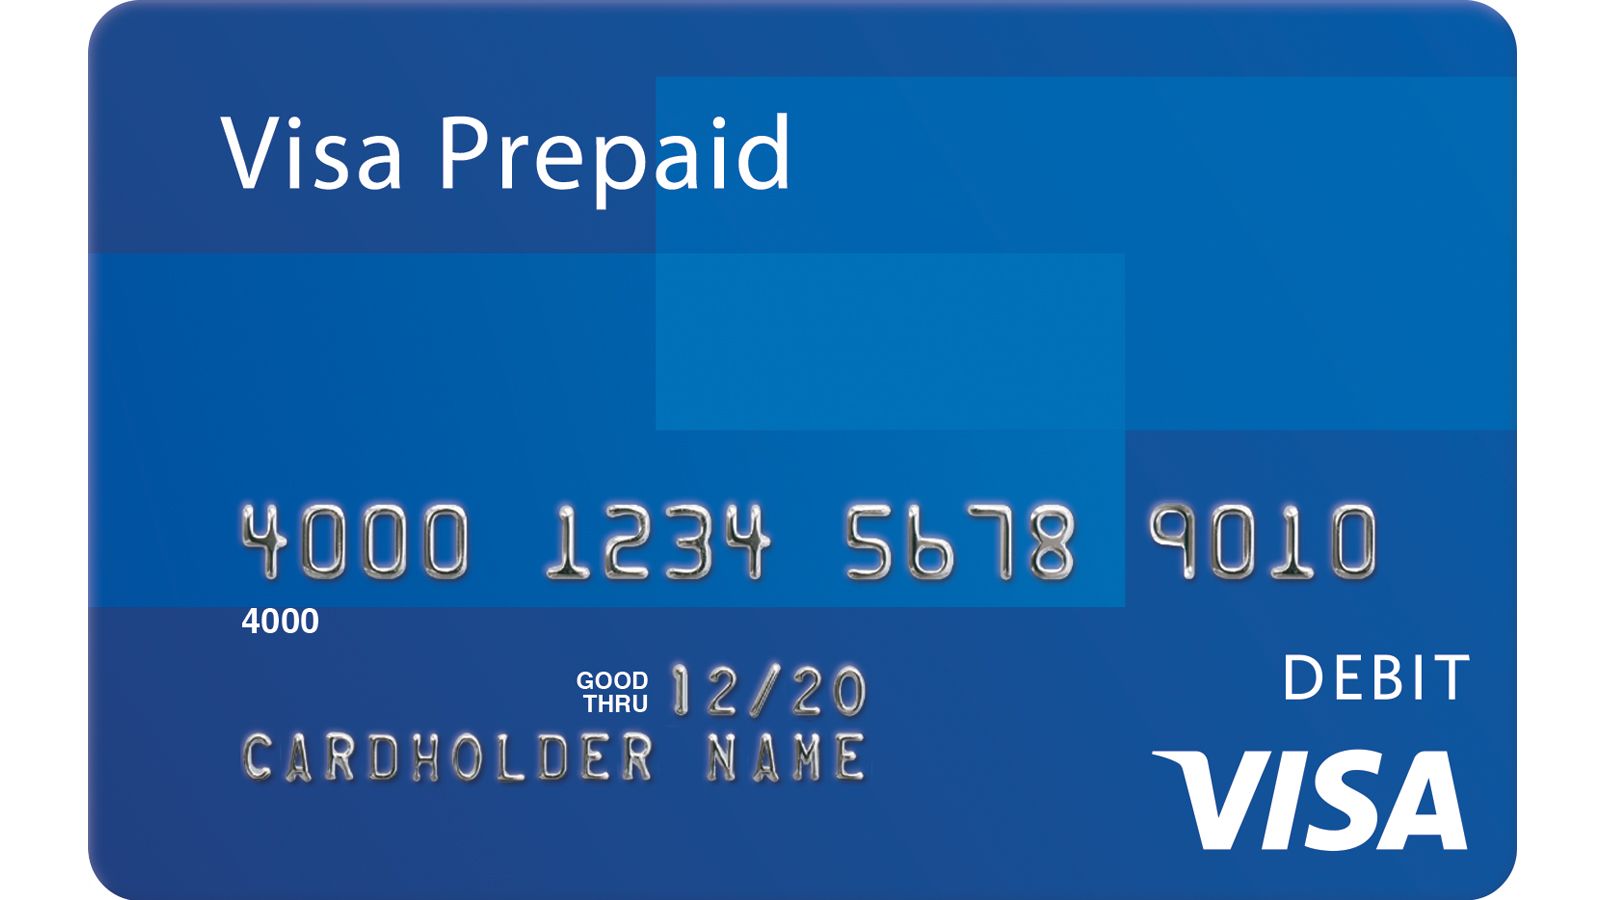 Http visa. Visa prepaid Card. Карточка виза. Предоплаченные карты. Предоплаченные банковские карты.